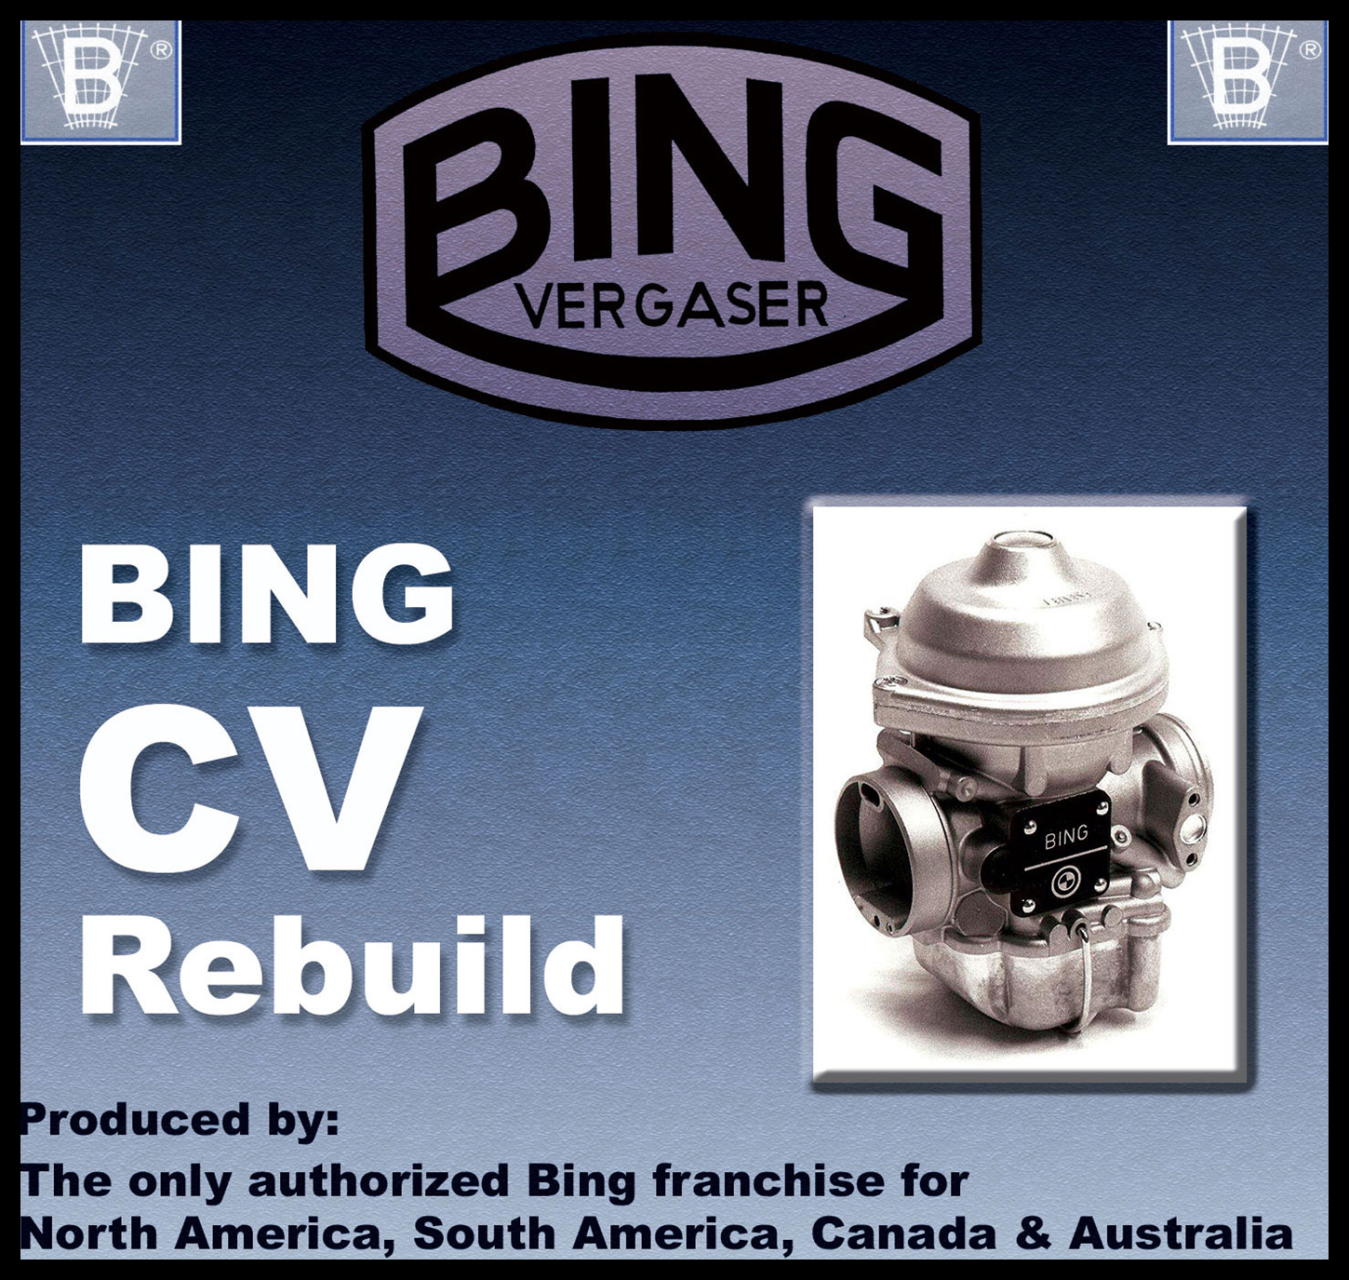 Bing carburetor manual pdf free